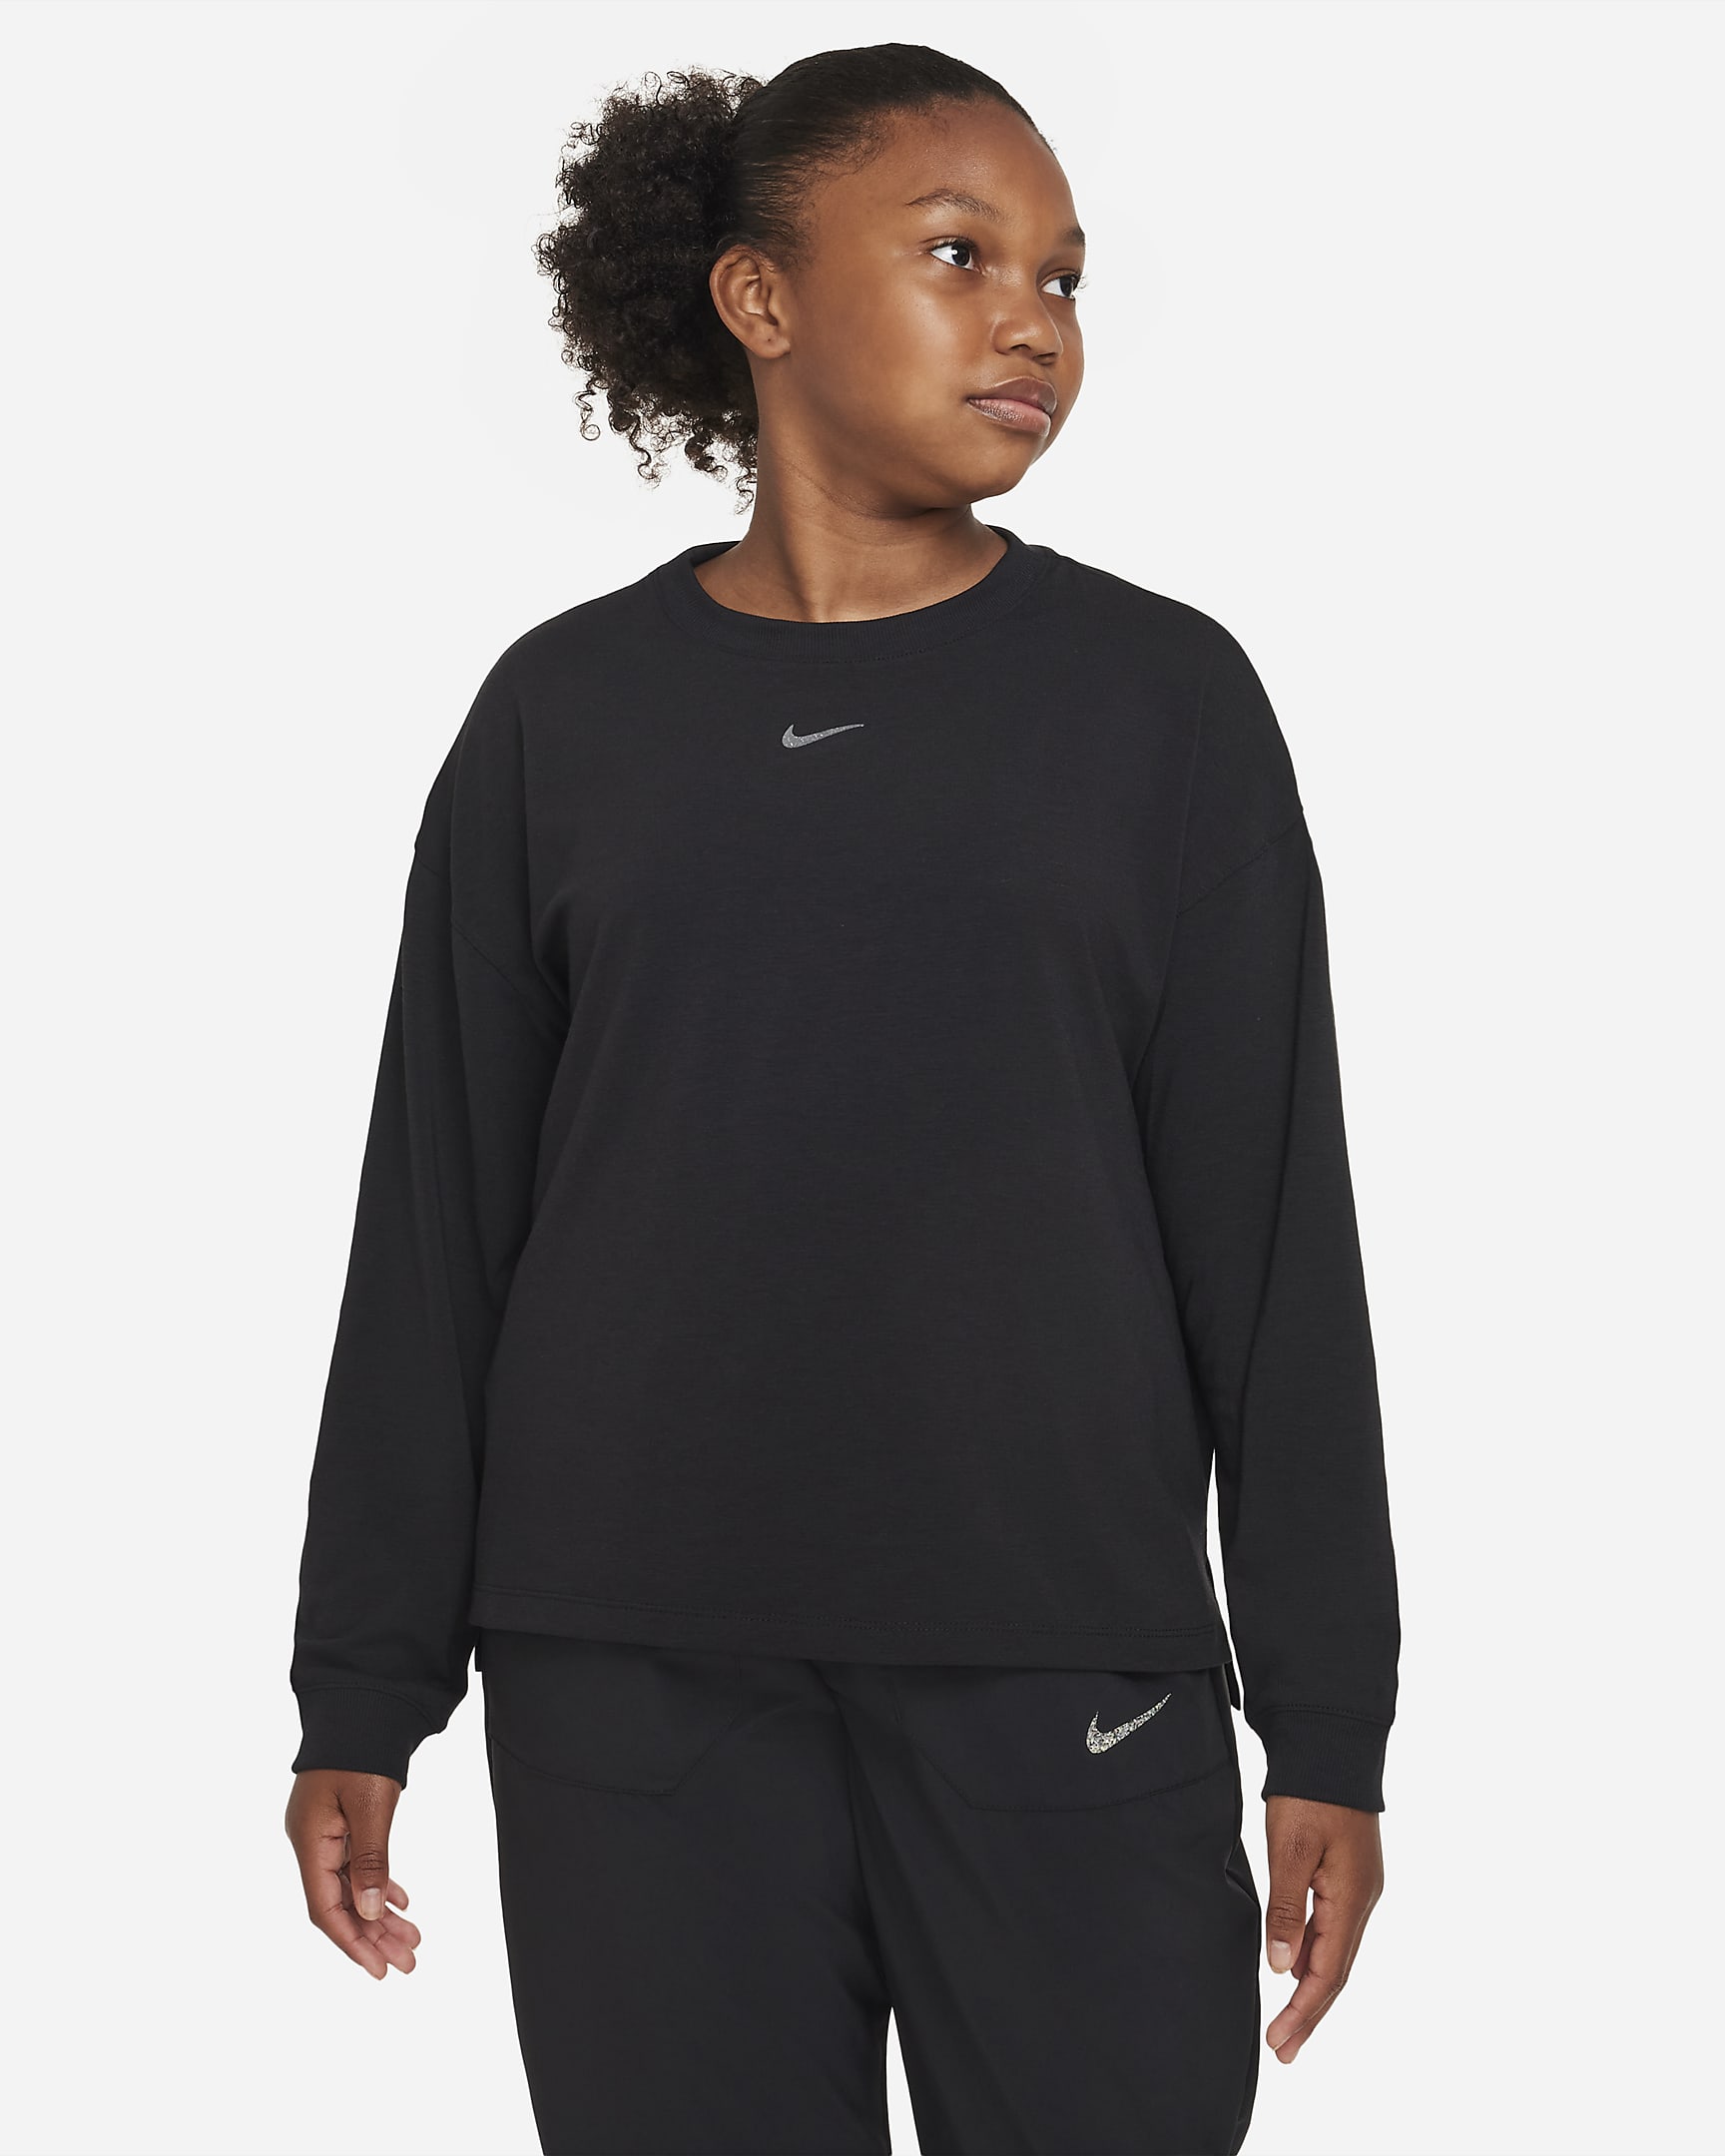 Nike Yoga Dri-FIT Big Kids' (Girls') Training Top (Extended Size) - Black